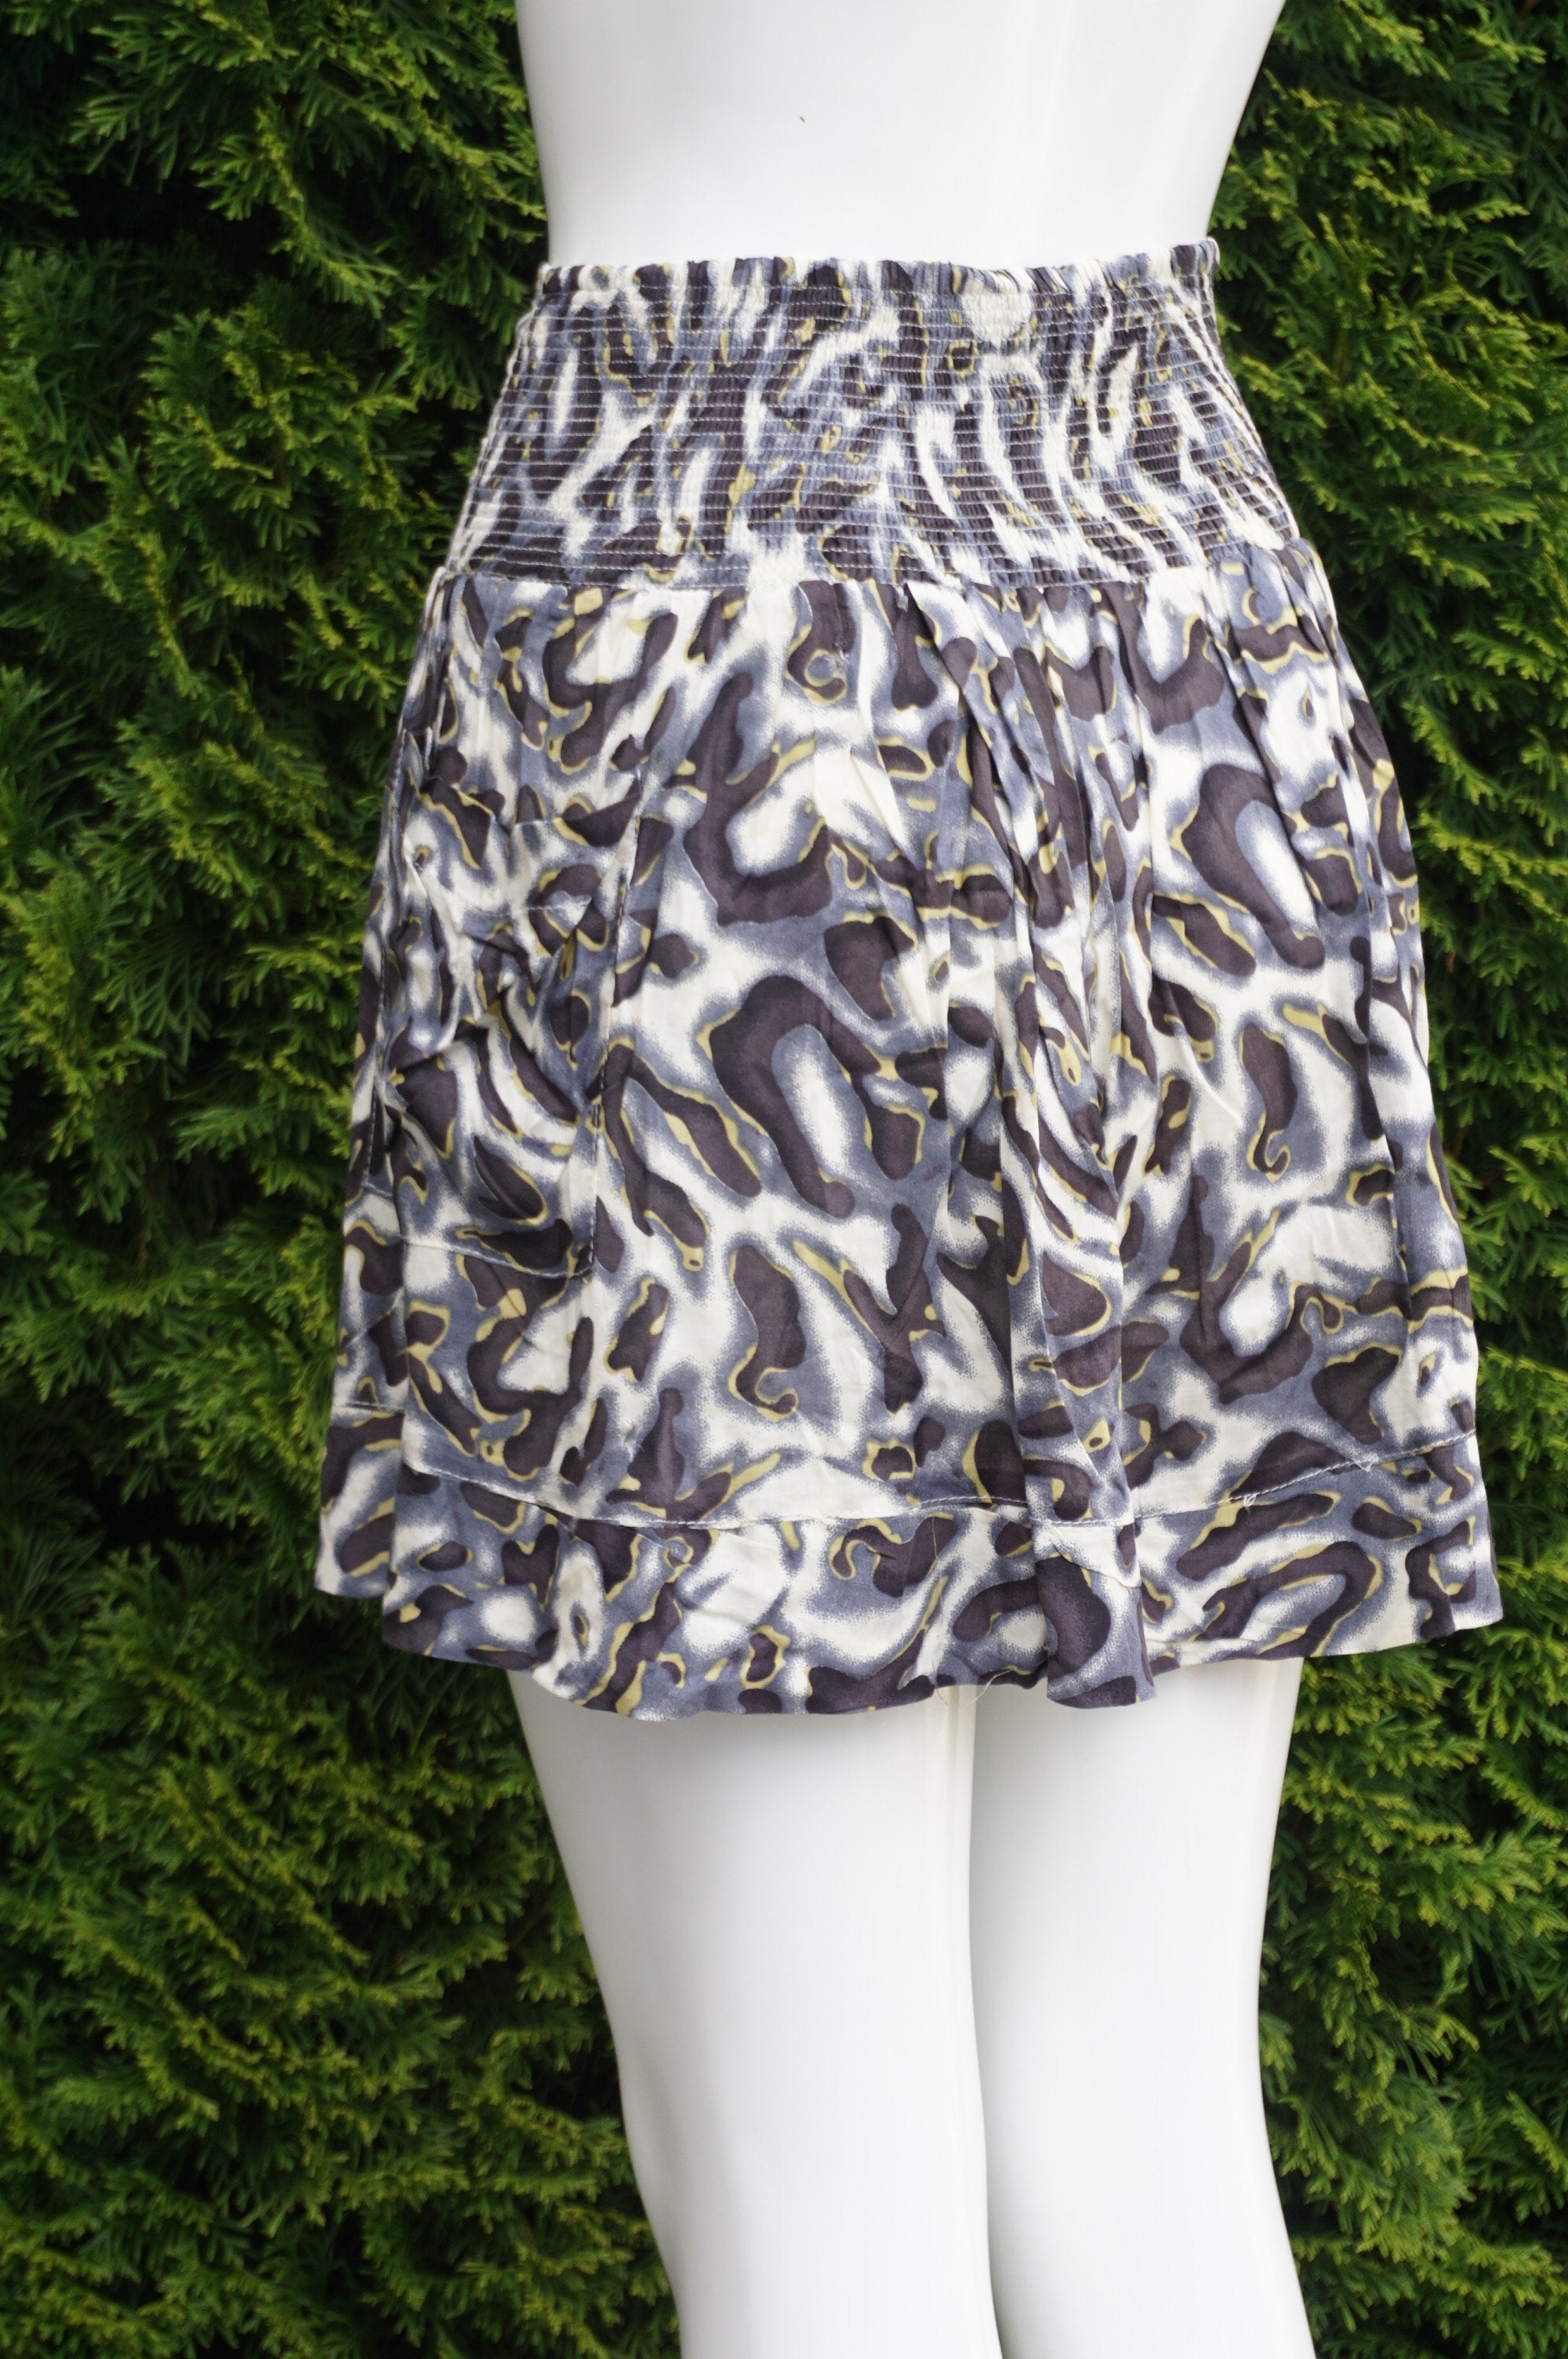 Costa Blanca Light Skirt with Pockets, Elastic waistband. Measures 24 inches when relaxed., White, Blue, 100% Rayon, women's Skirts & Shorts, women's White, Blue Skirts & Shorts, Costa Blanca women's Skirts & Shorts, light skirts, summer skirt,